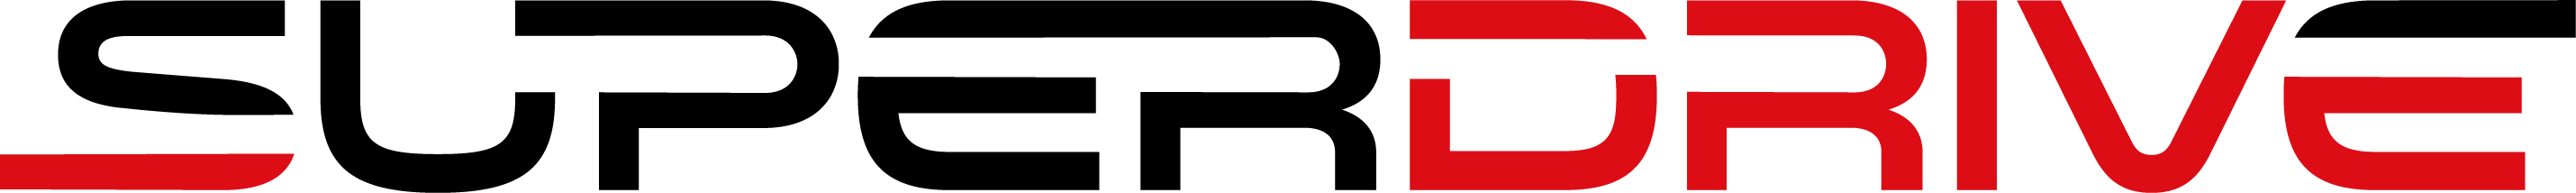 Superdrive logo